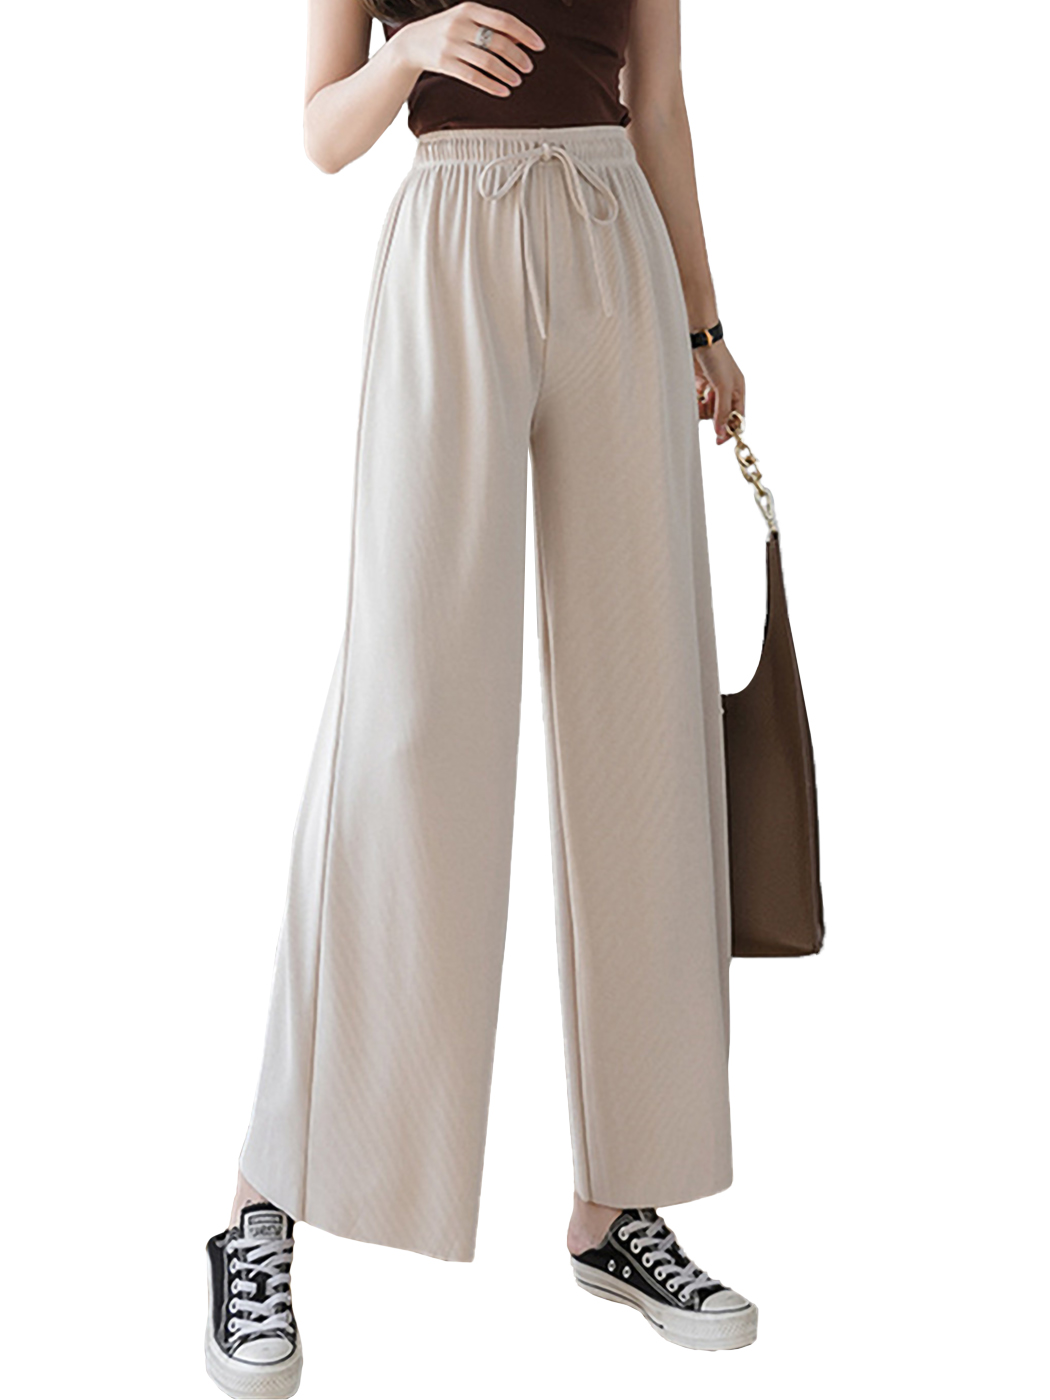 Hot Women's Casual Loose Wide Leg Crop Sweatpant Pull On Dress Pants | eBay